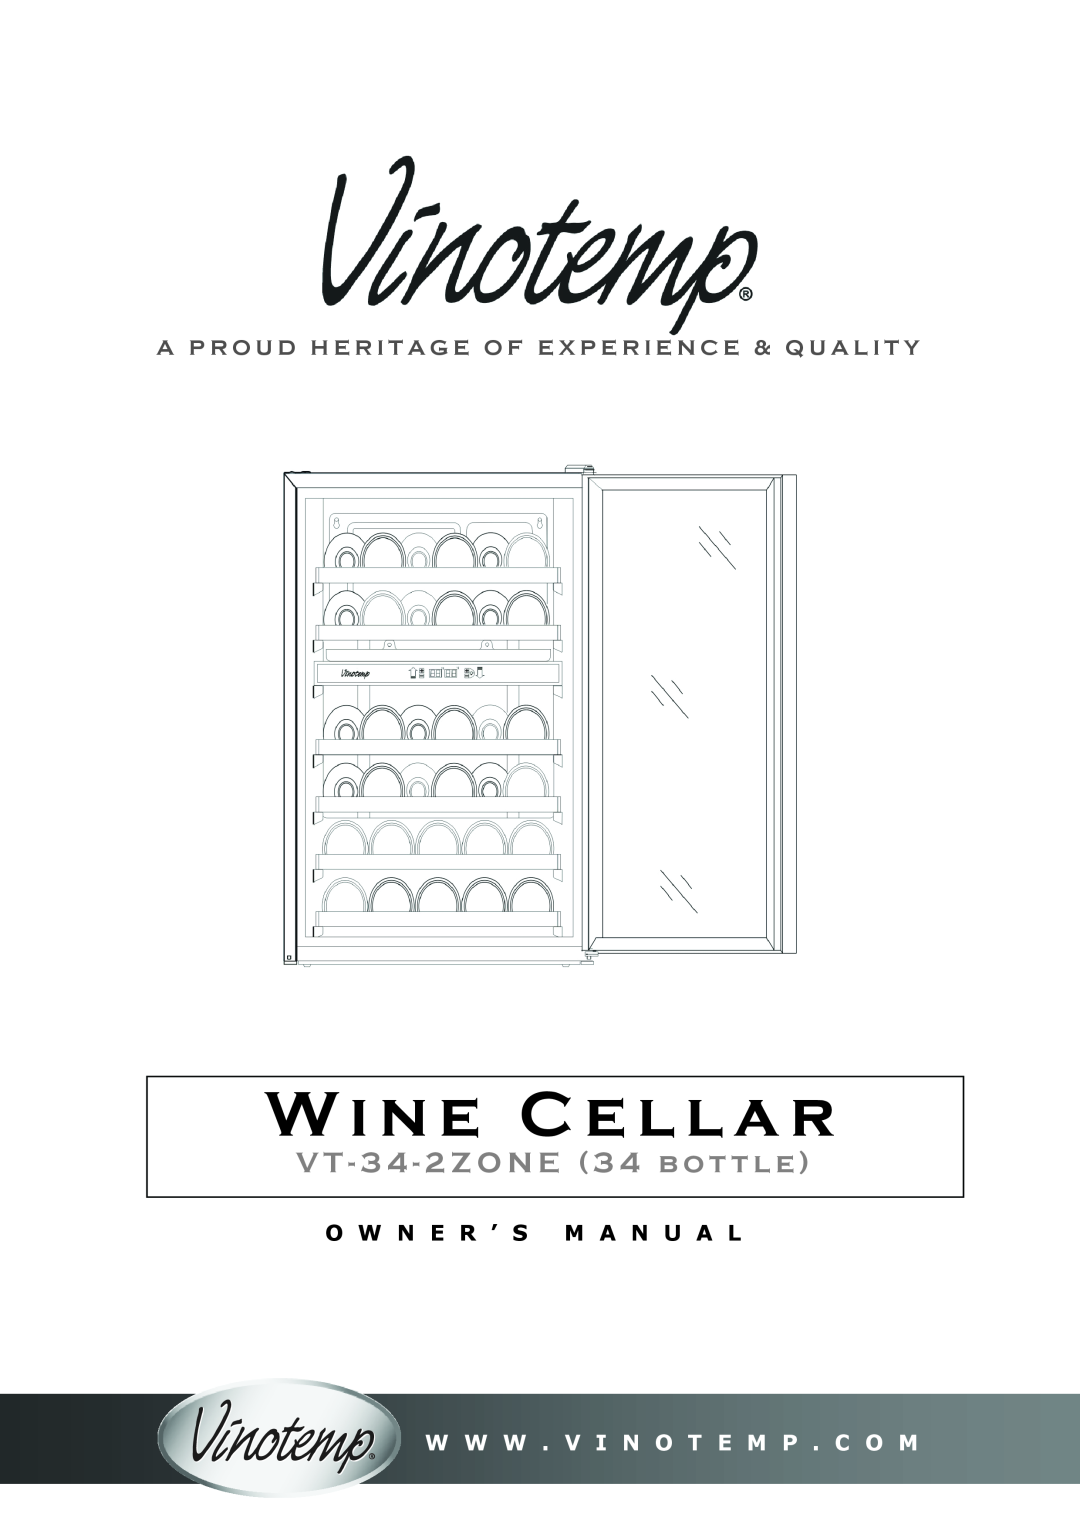 Vinotemp VT-34-2ZONE owner manual Wine Cellar, V T - 3 4 - 2 Z O N E 3 4 b o t t l e, O W N E R ’ S M A N U A L 